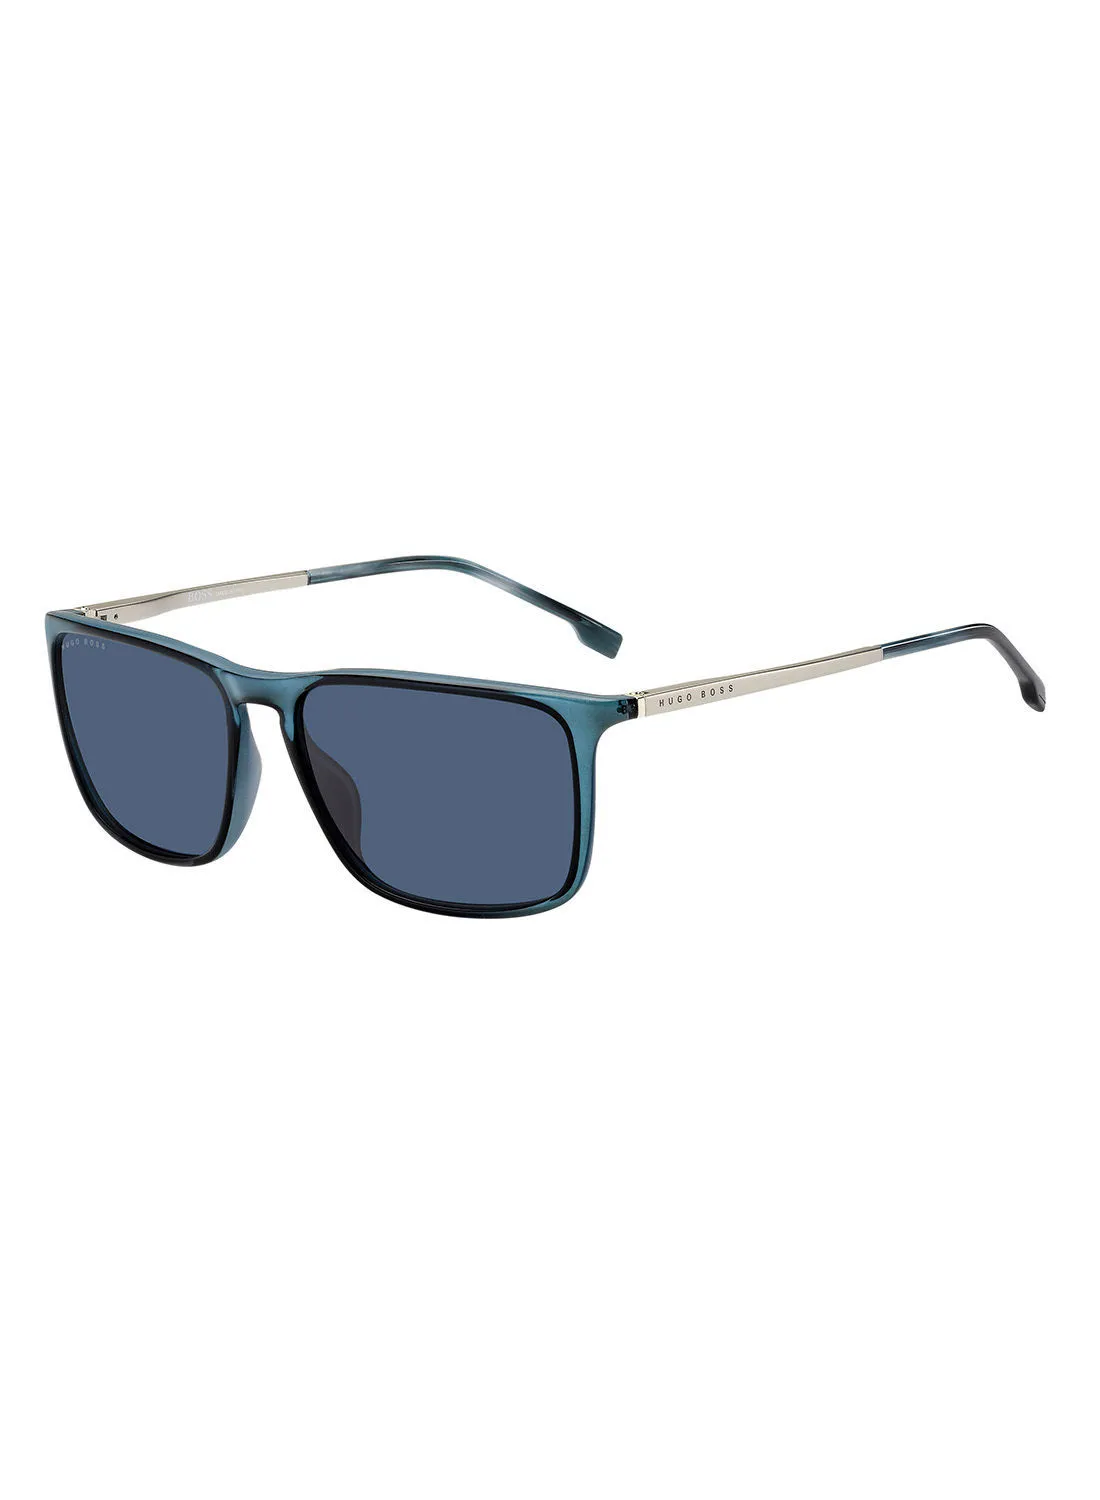 HUGO BOSS UV Protection Rectangular Eyewear Sunglasses BOSS 1182/S/IT  BLUE 57